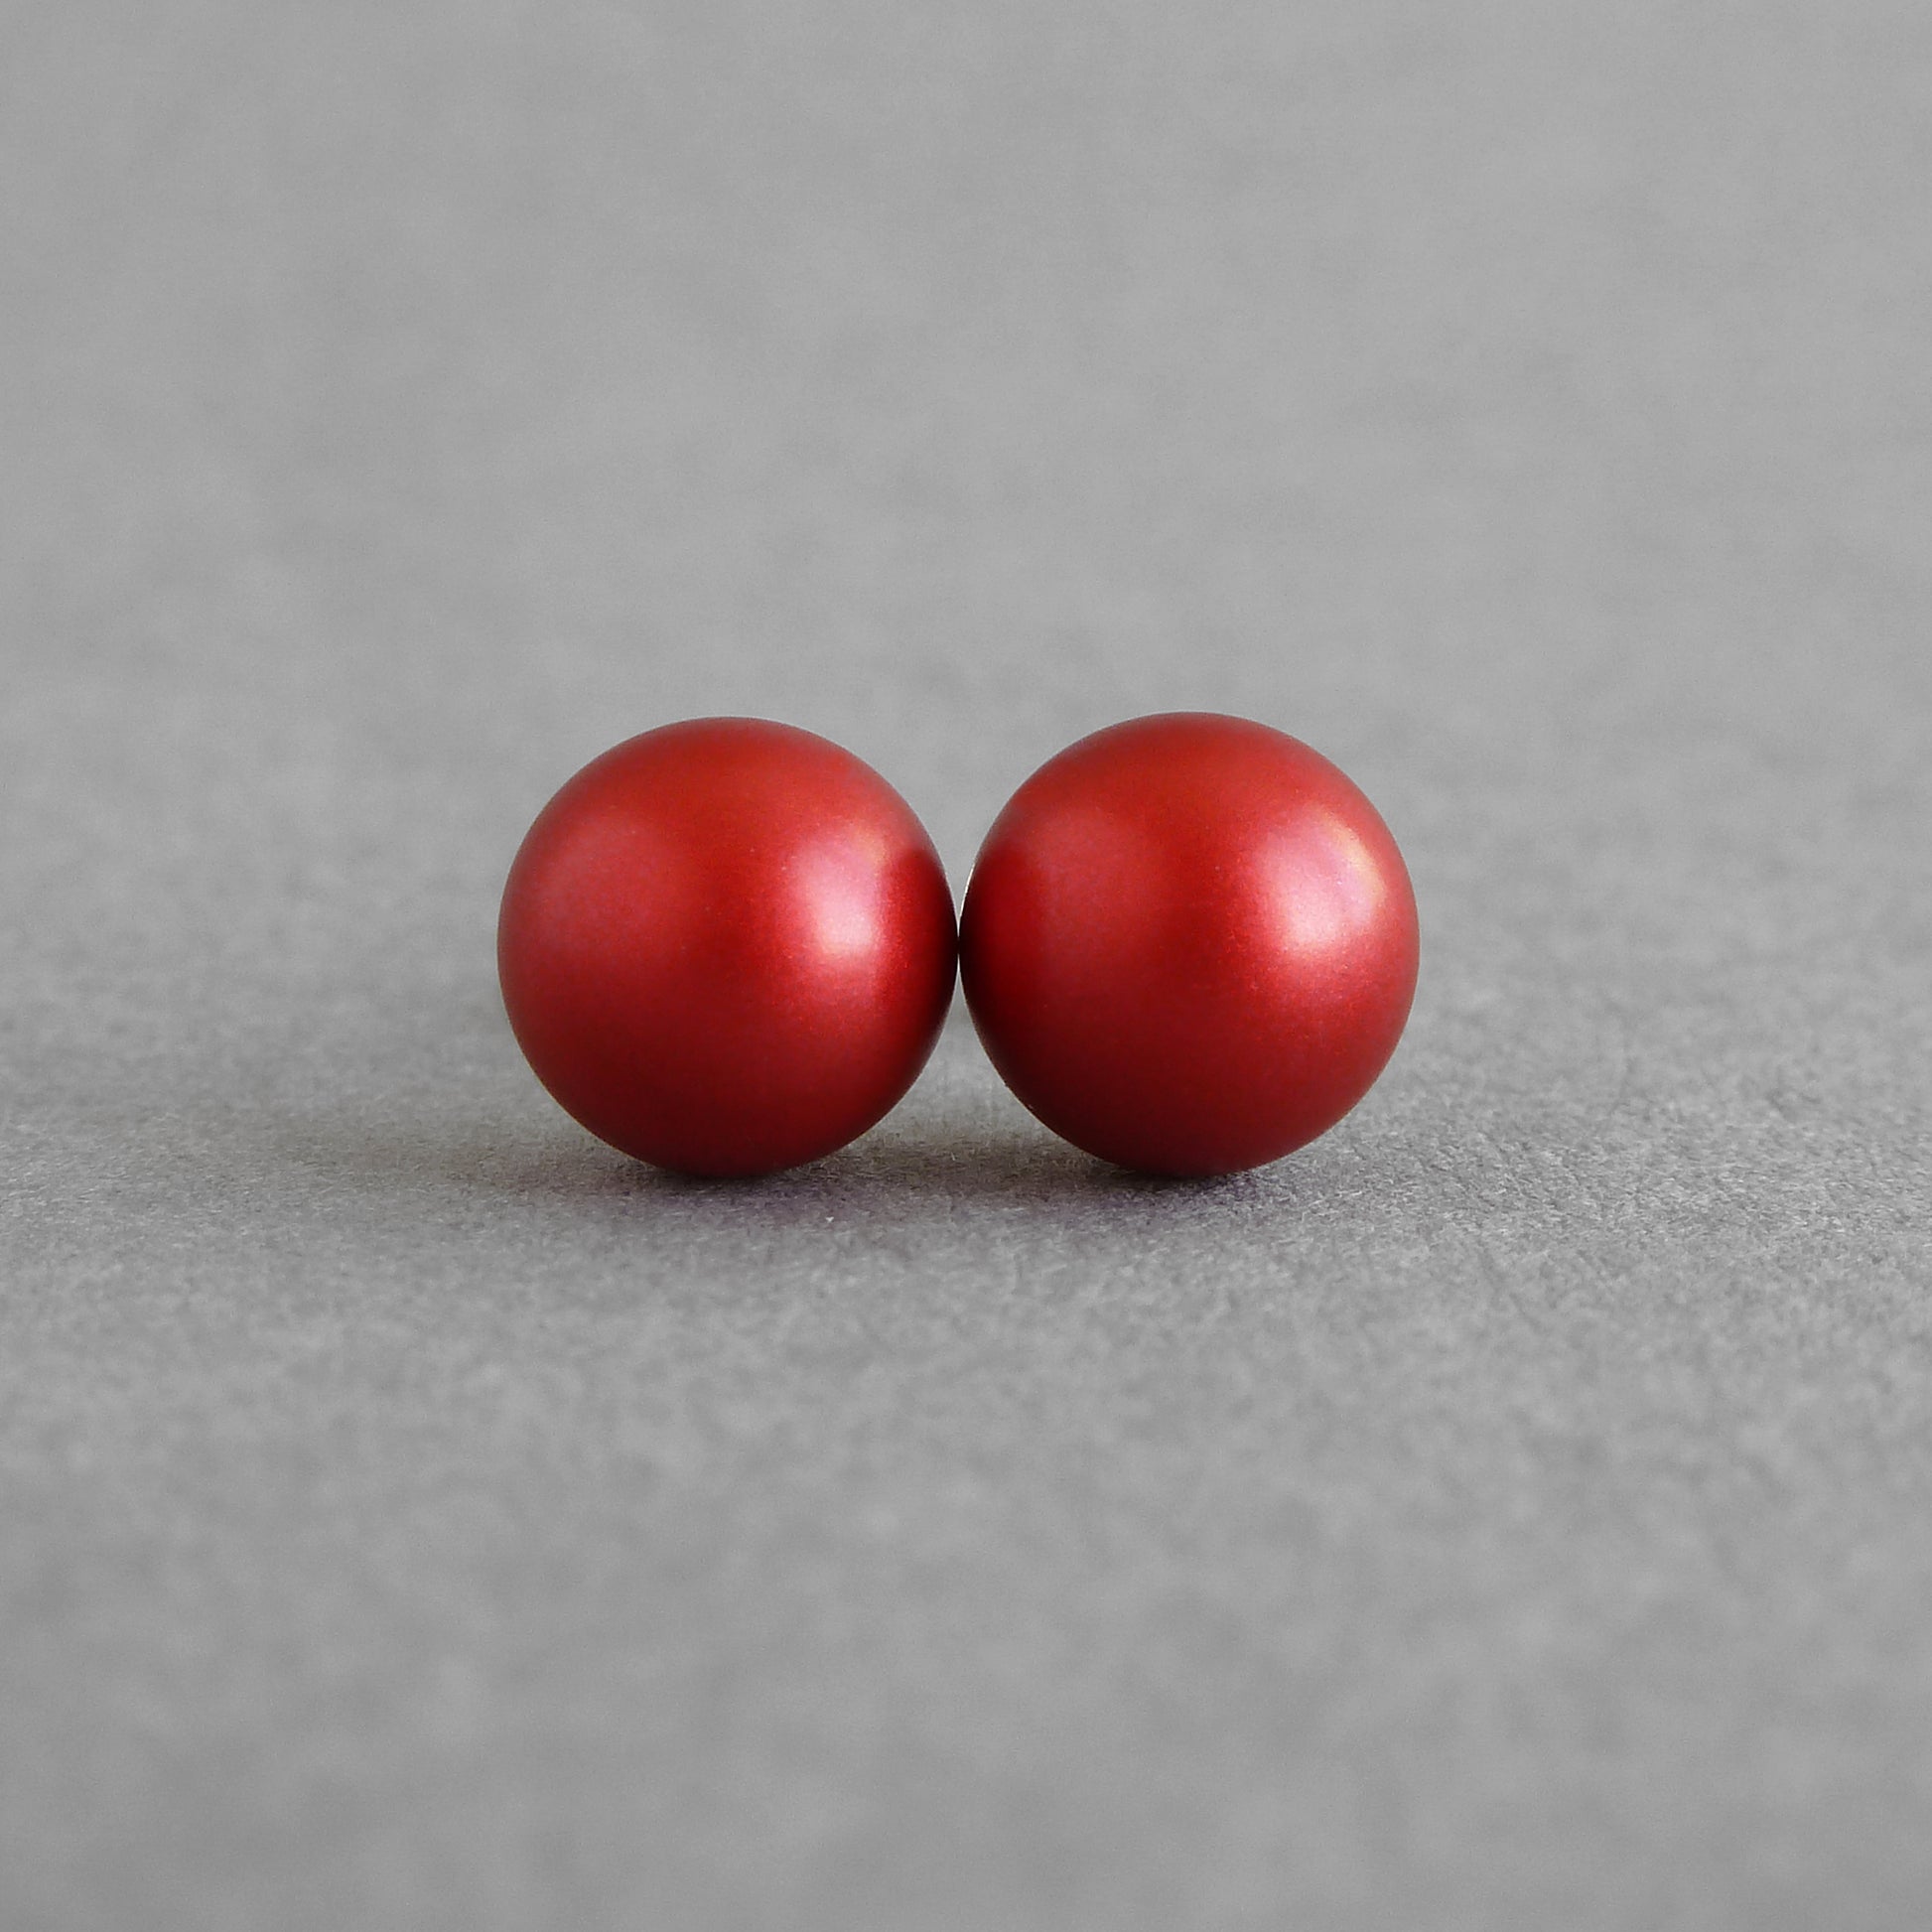 8mm bright red stud earrings